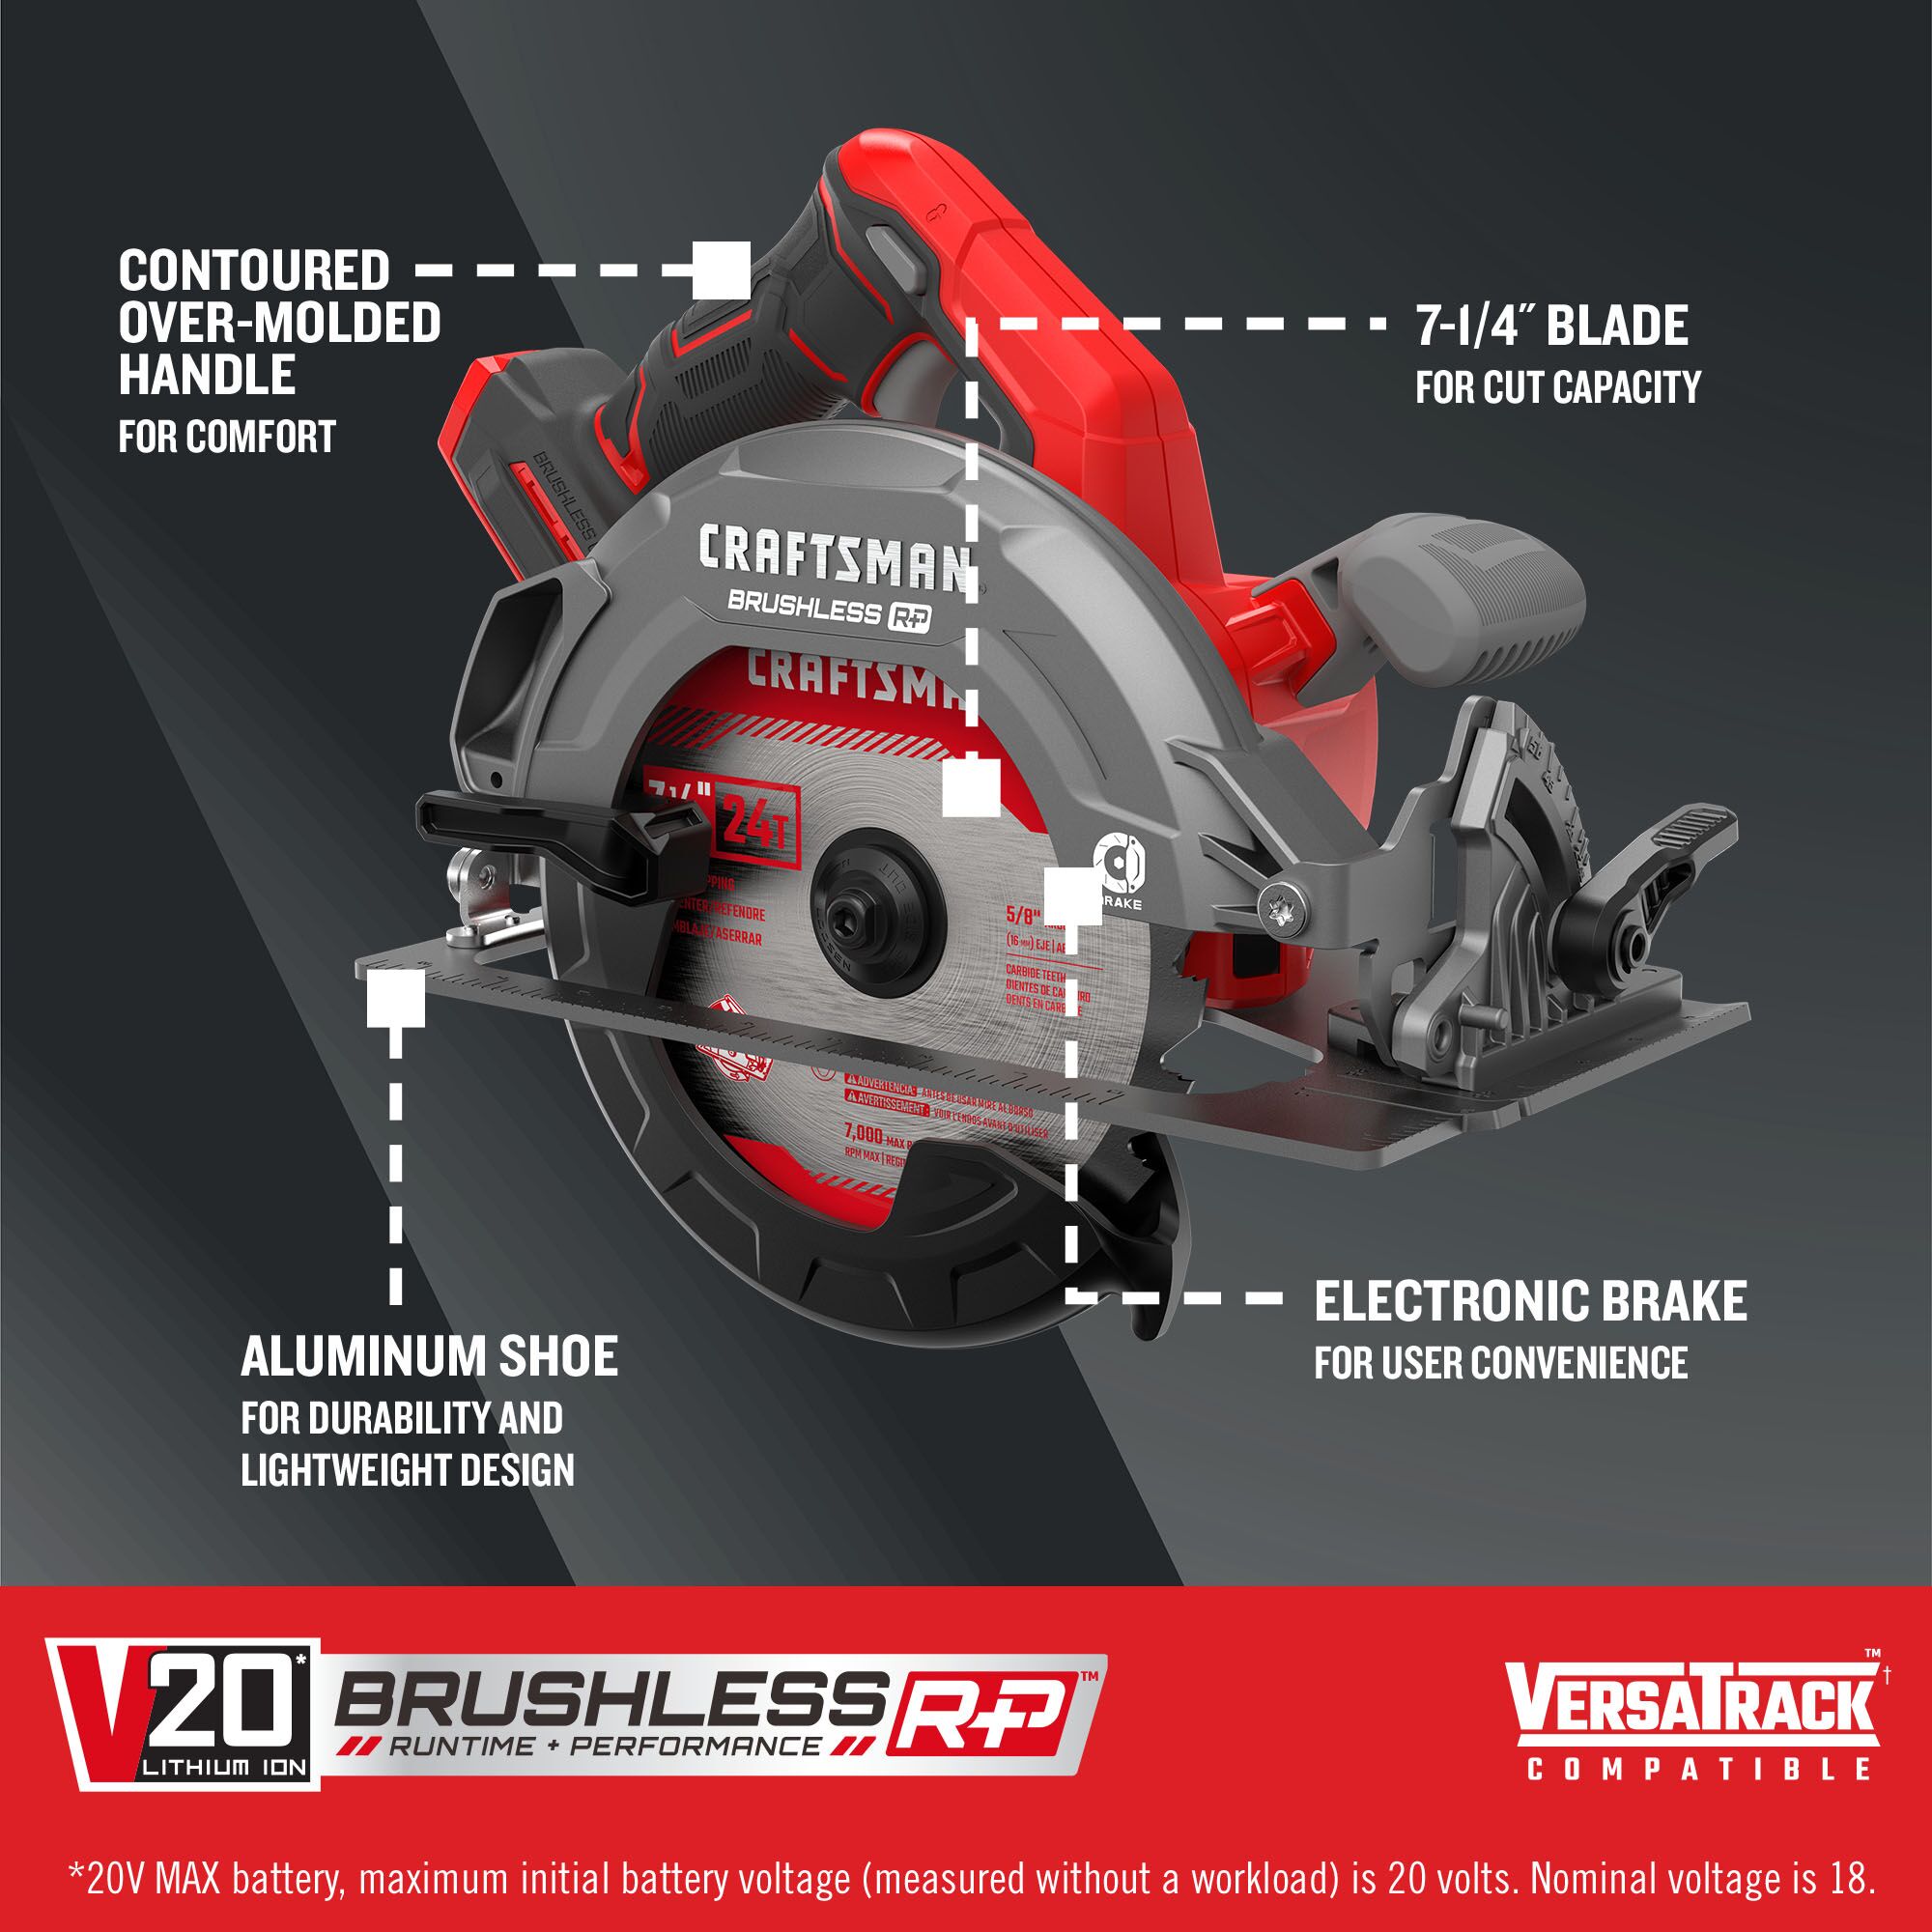 V20* BRUSHLESS RP™ Cordless Oscillating Tool (Tool Only)